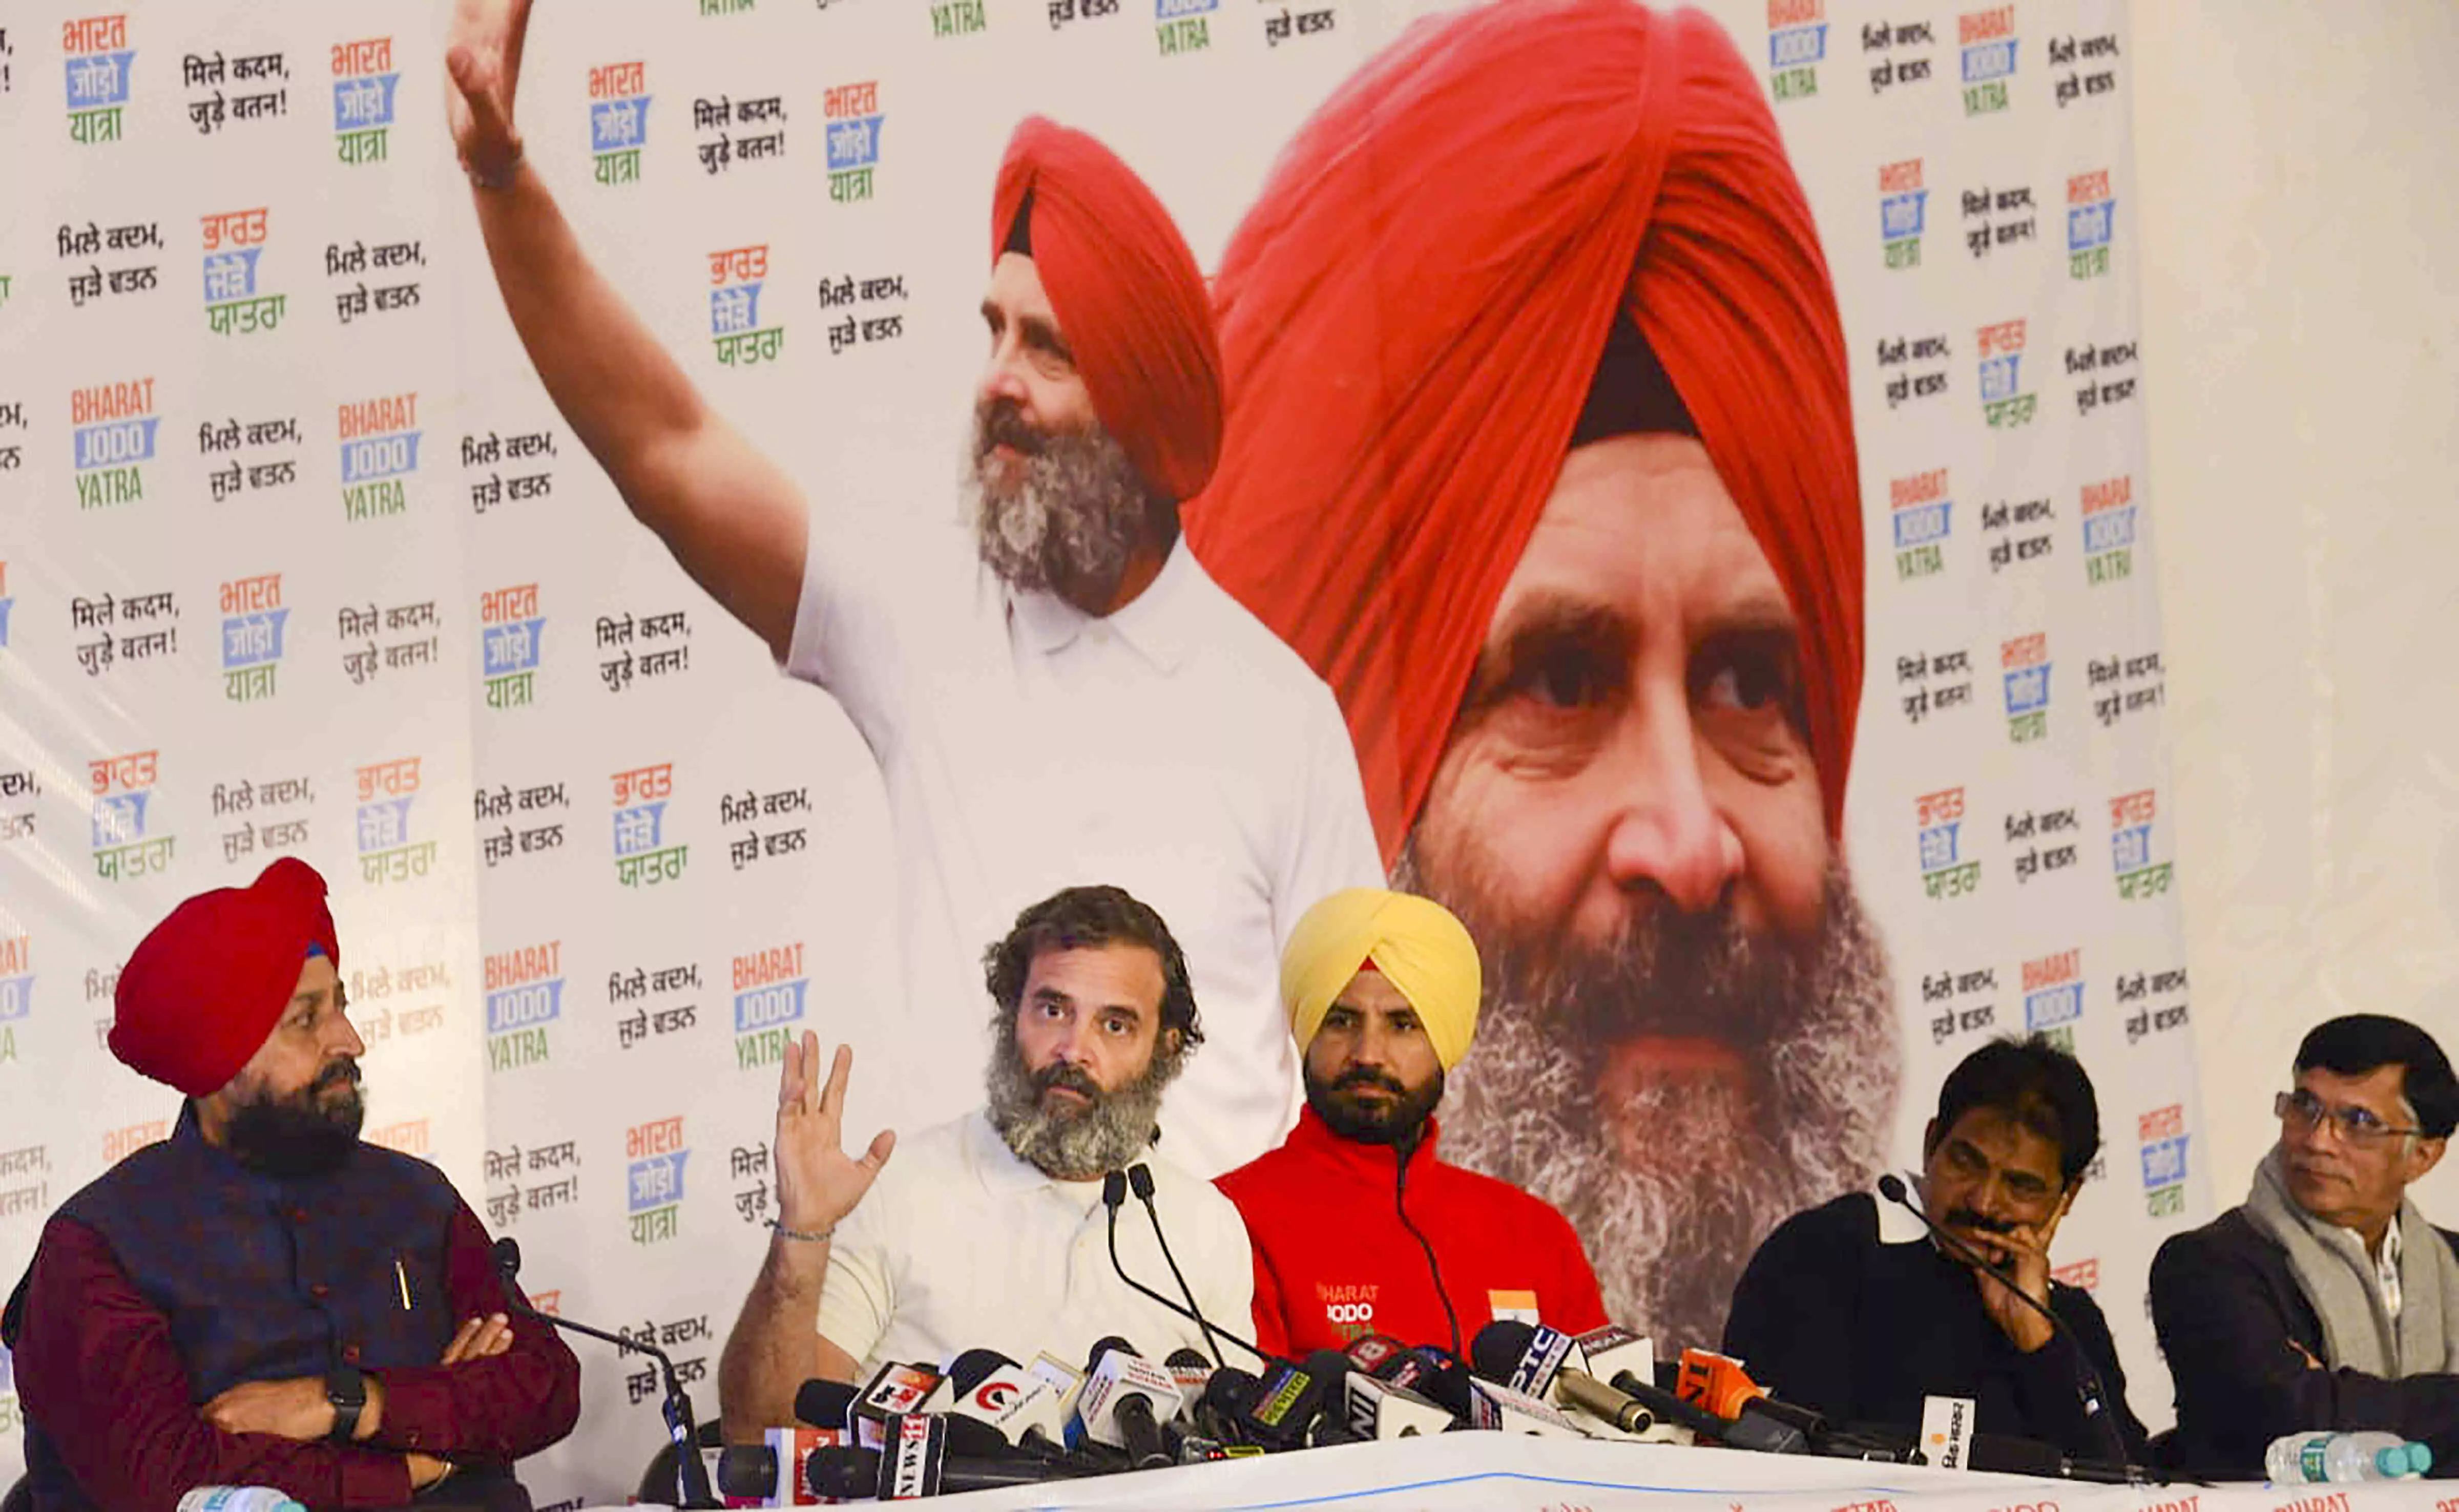 Have huge respect for Sikh community, Rahul Gandhi says in Punjab